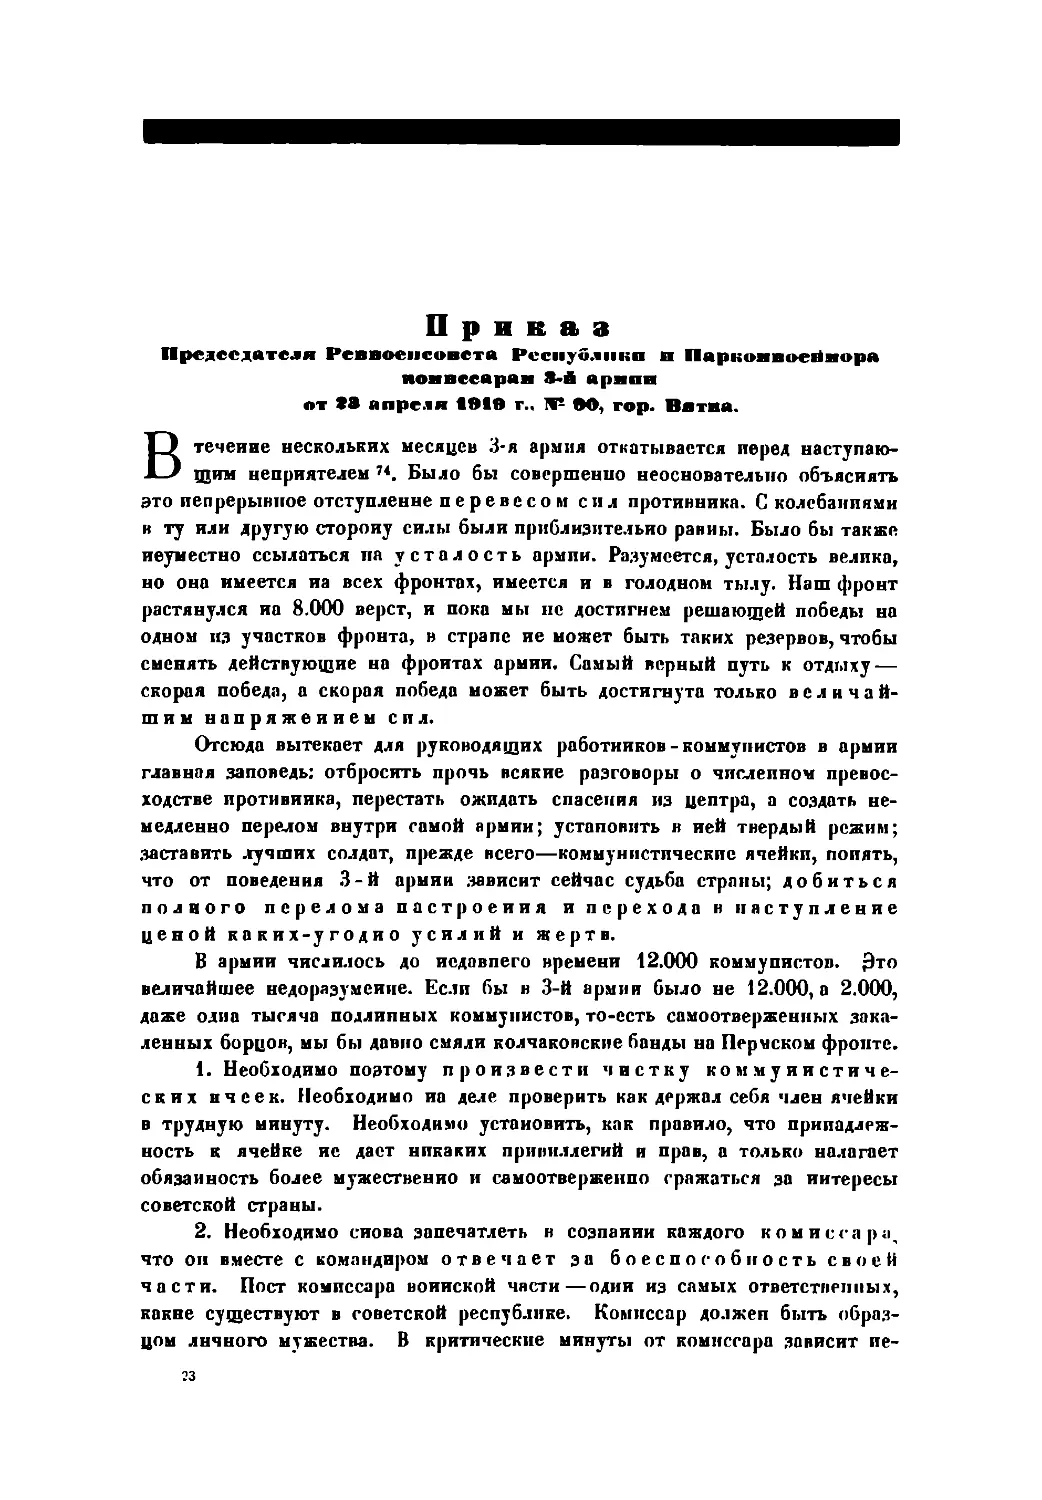 Приказ комиссарам З-й армии от 22 апреля 1919 г., № 90, гор. Вятка